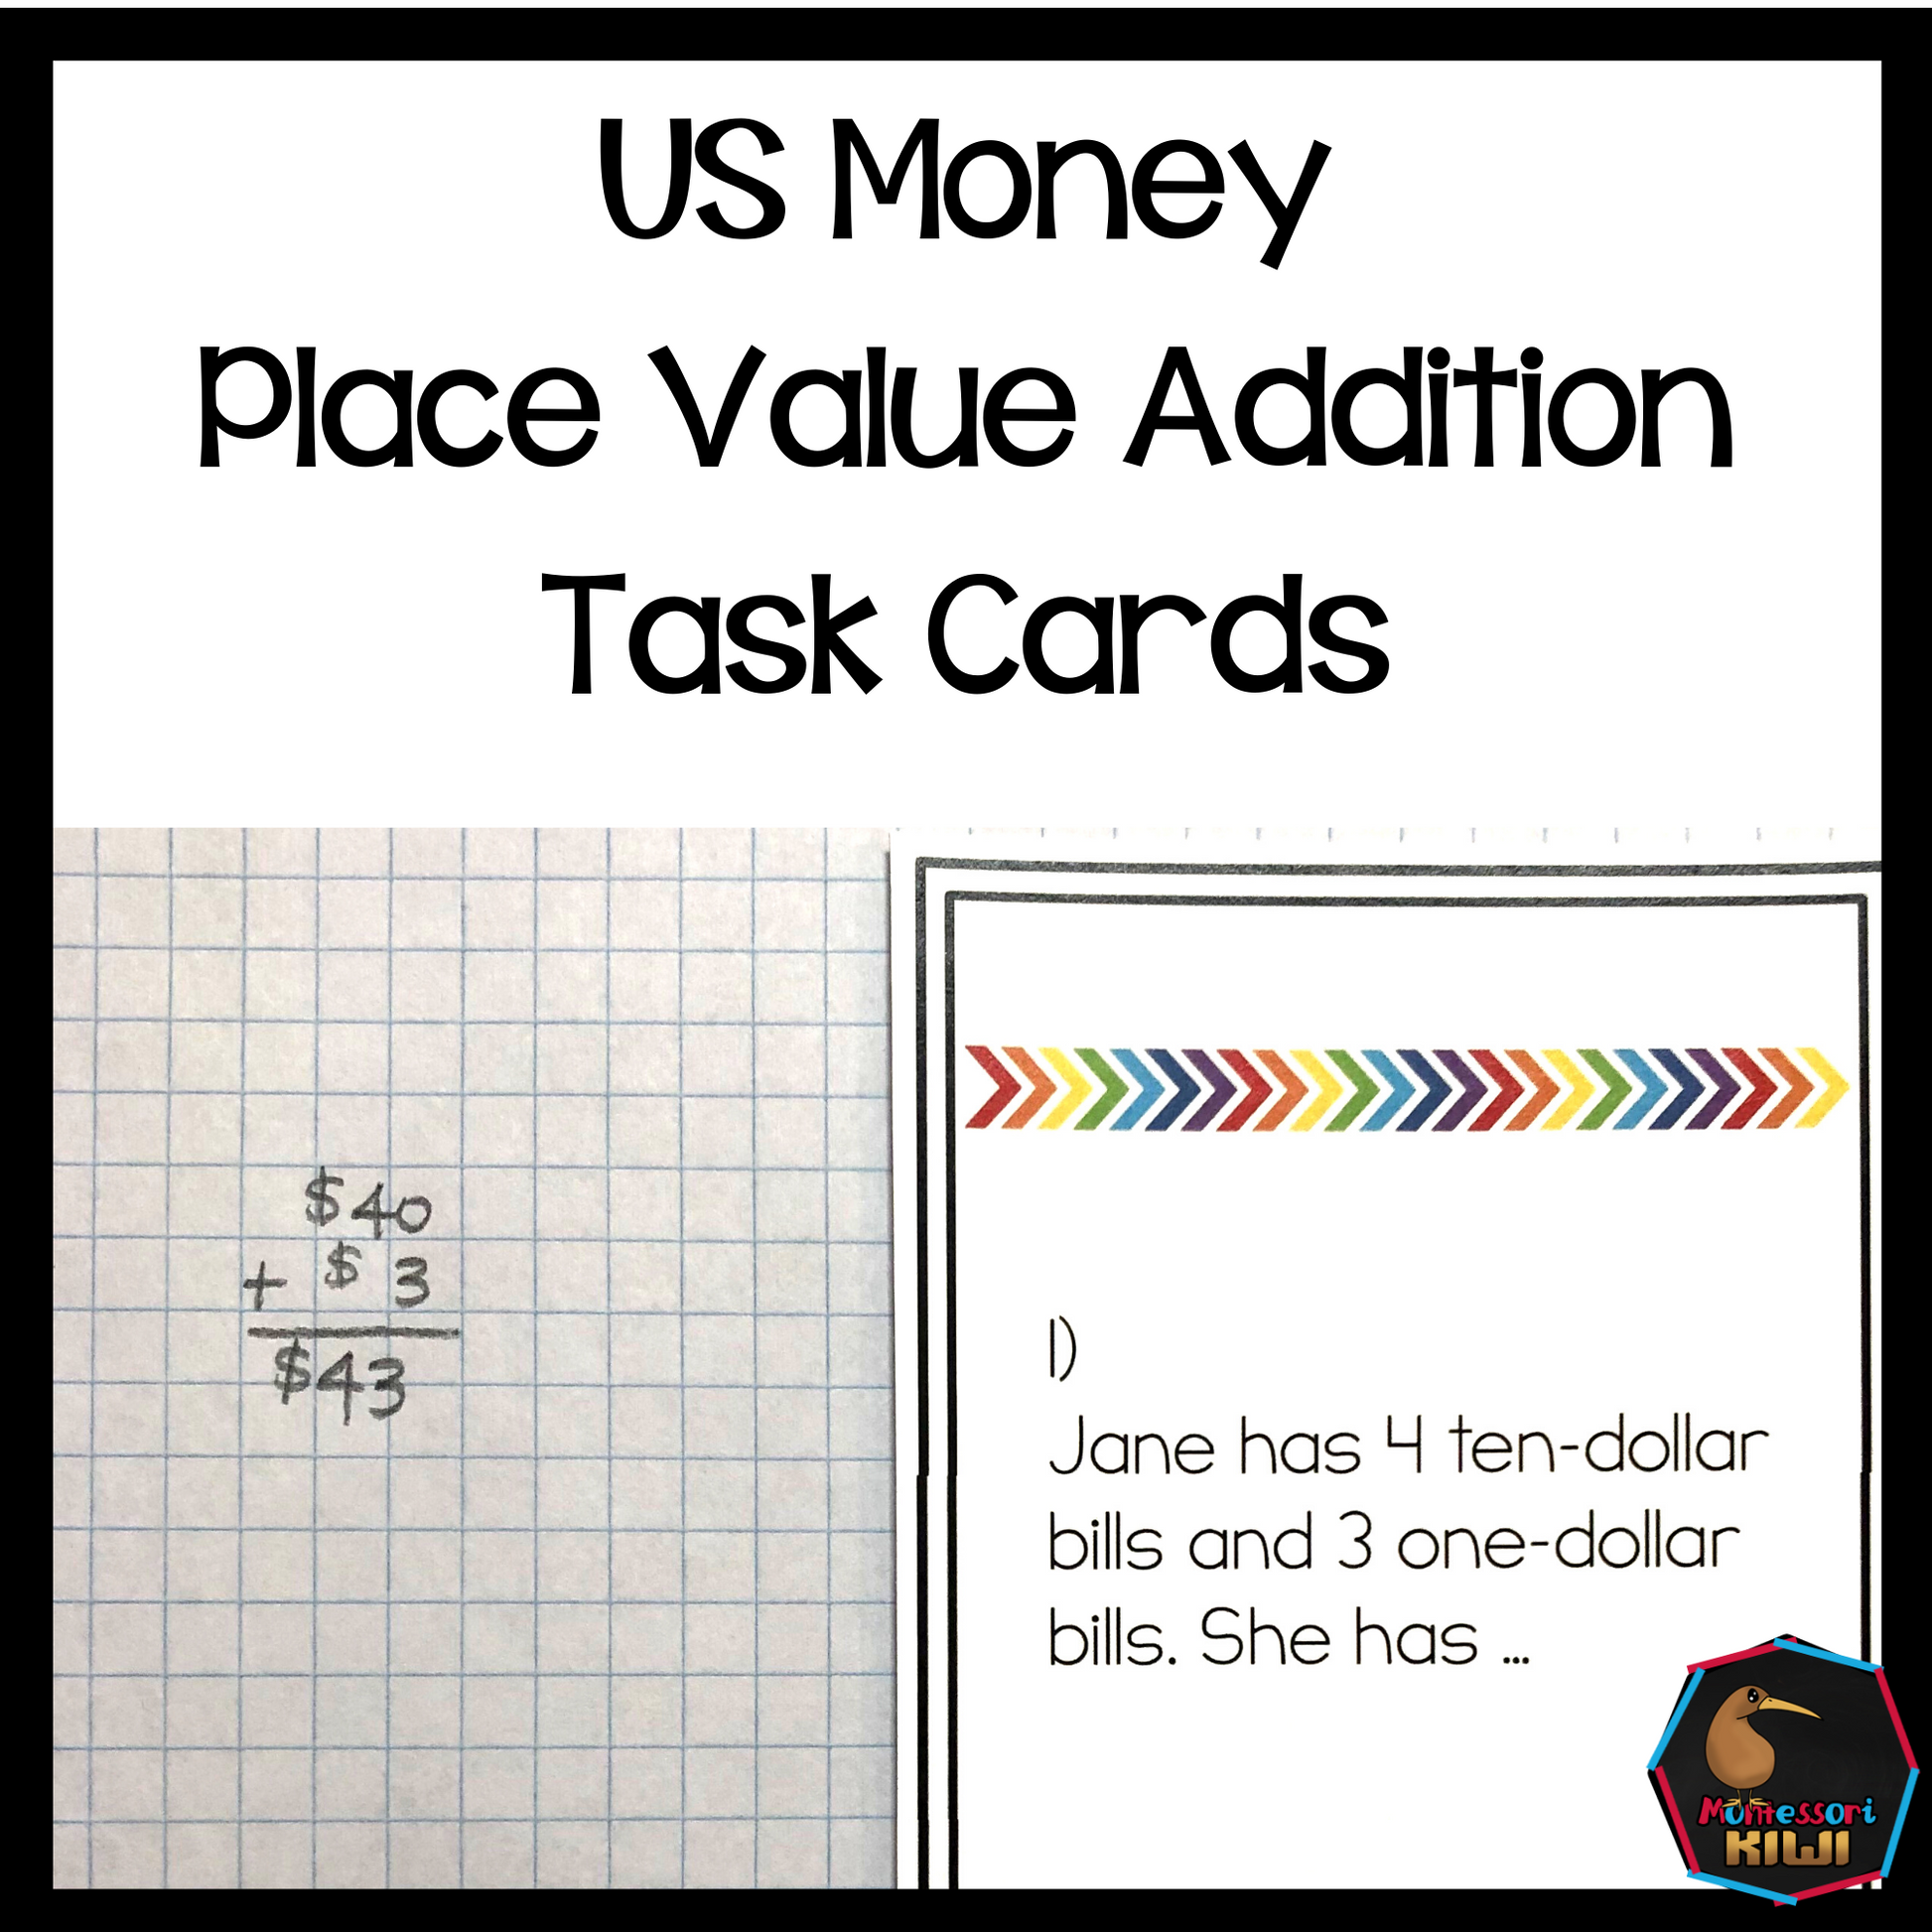 US Money Place Value Addition Task Cards - montessorikiwi